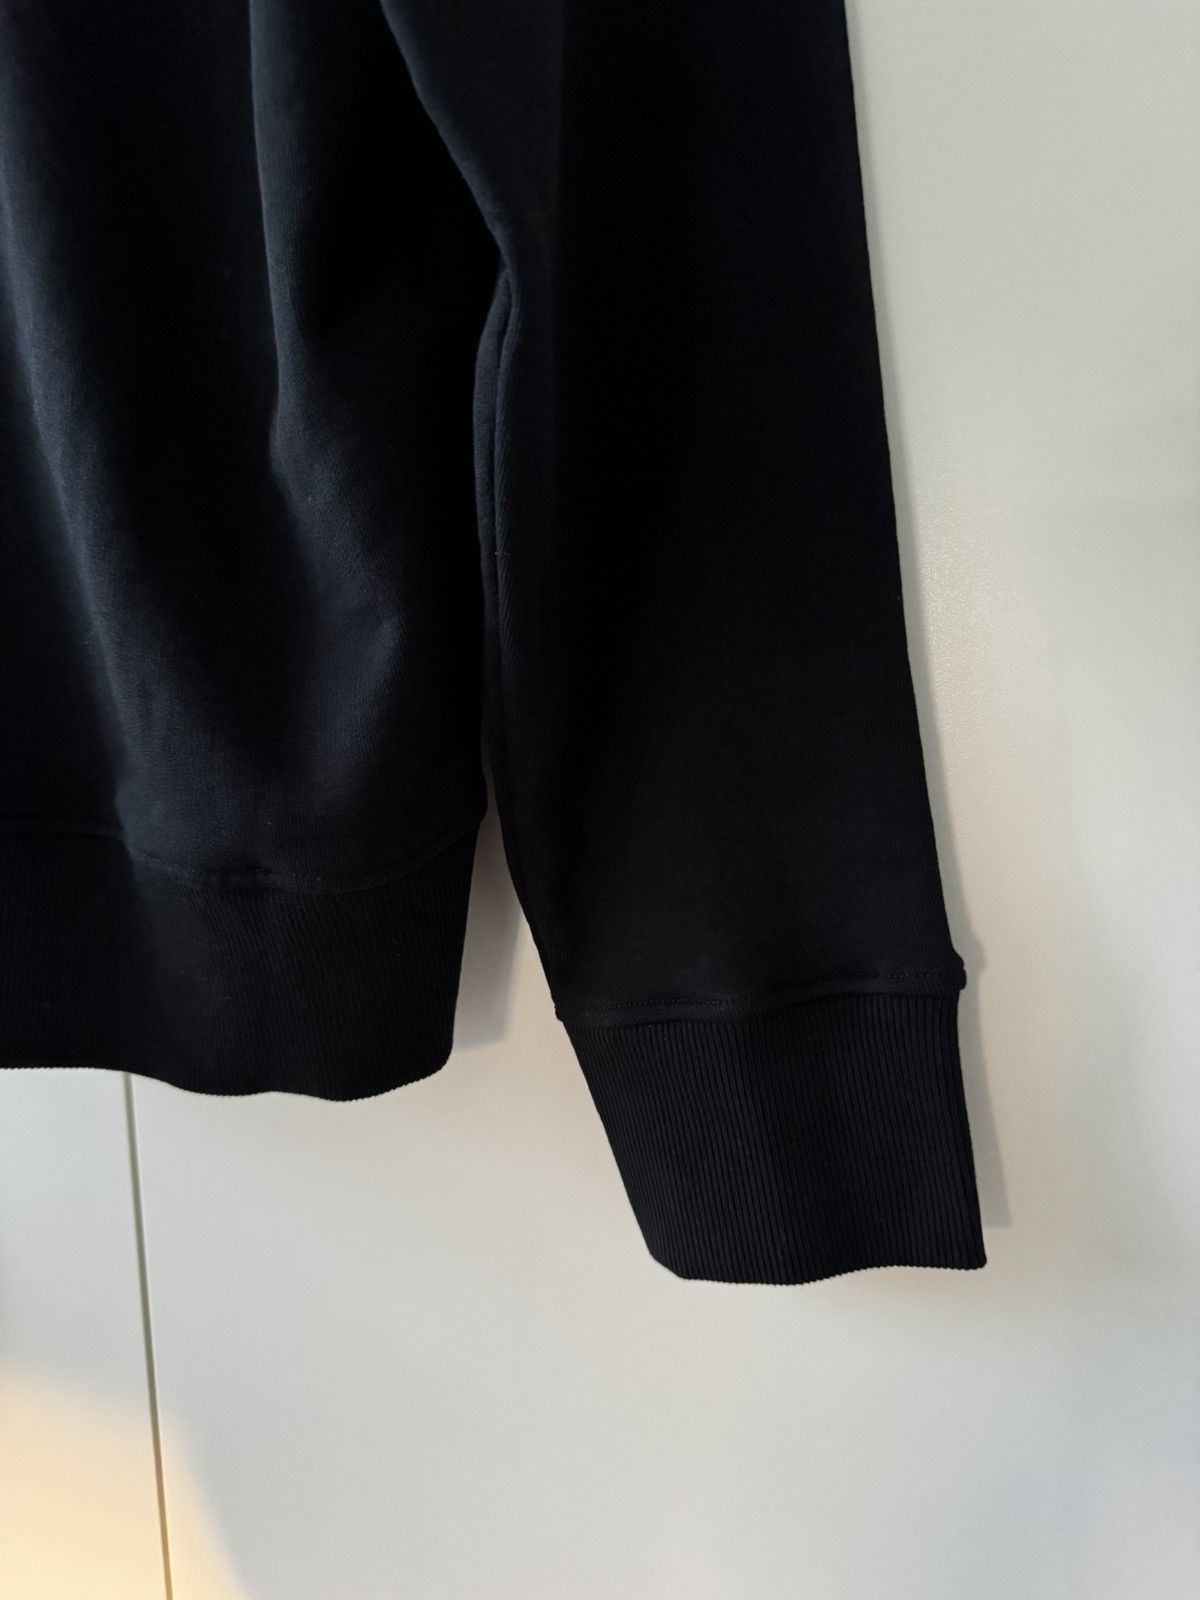 Craig Green Black Laced Sweatshirt FW21 XL Size US XL / EU 56 / 4 - 5 Thumbnail